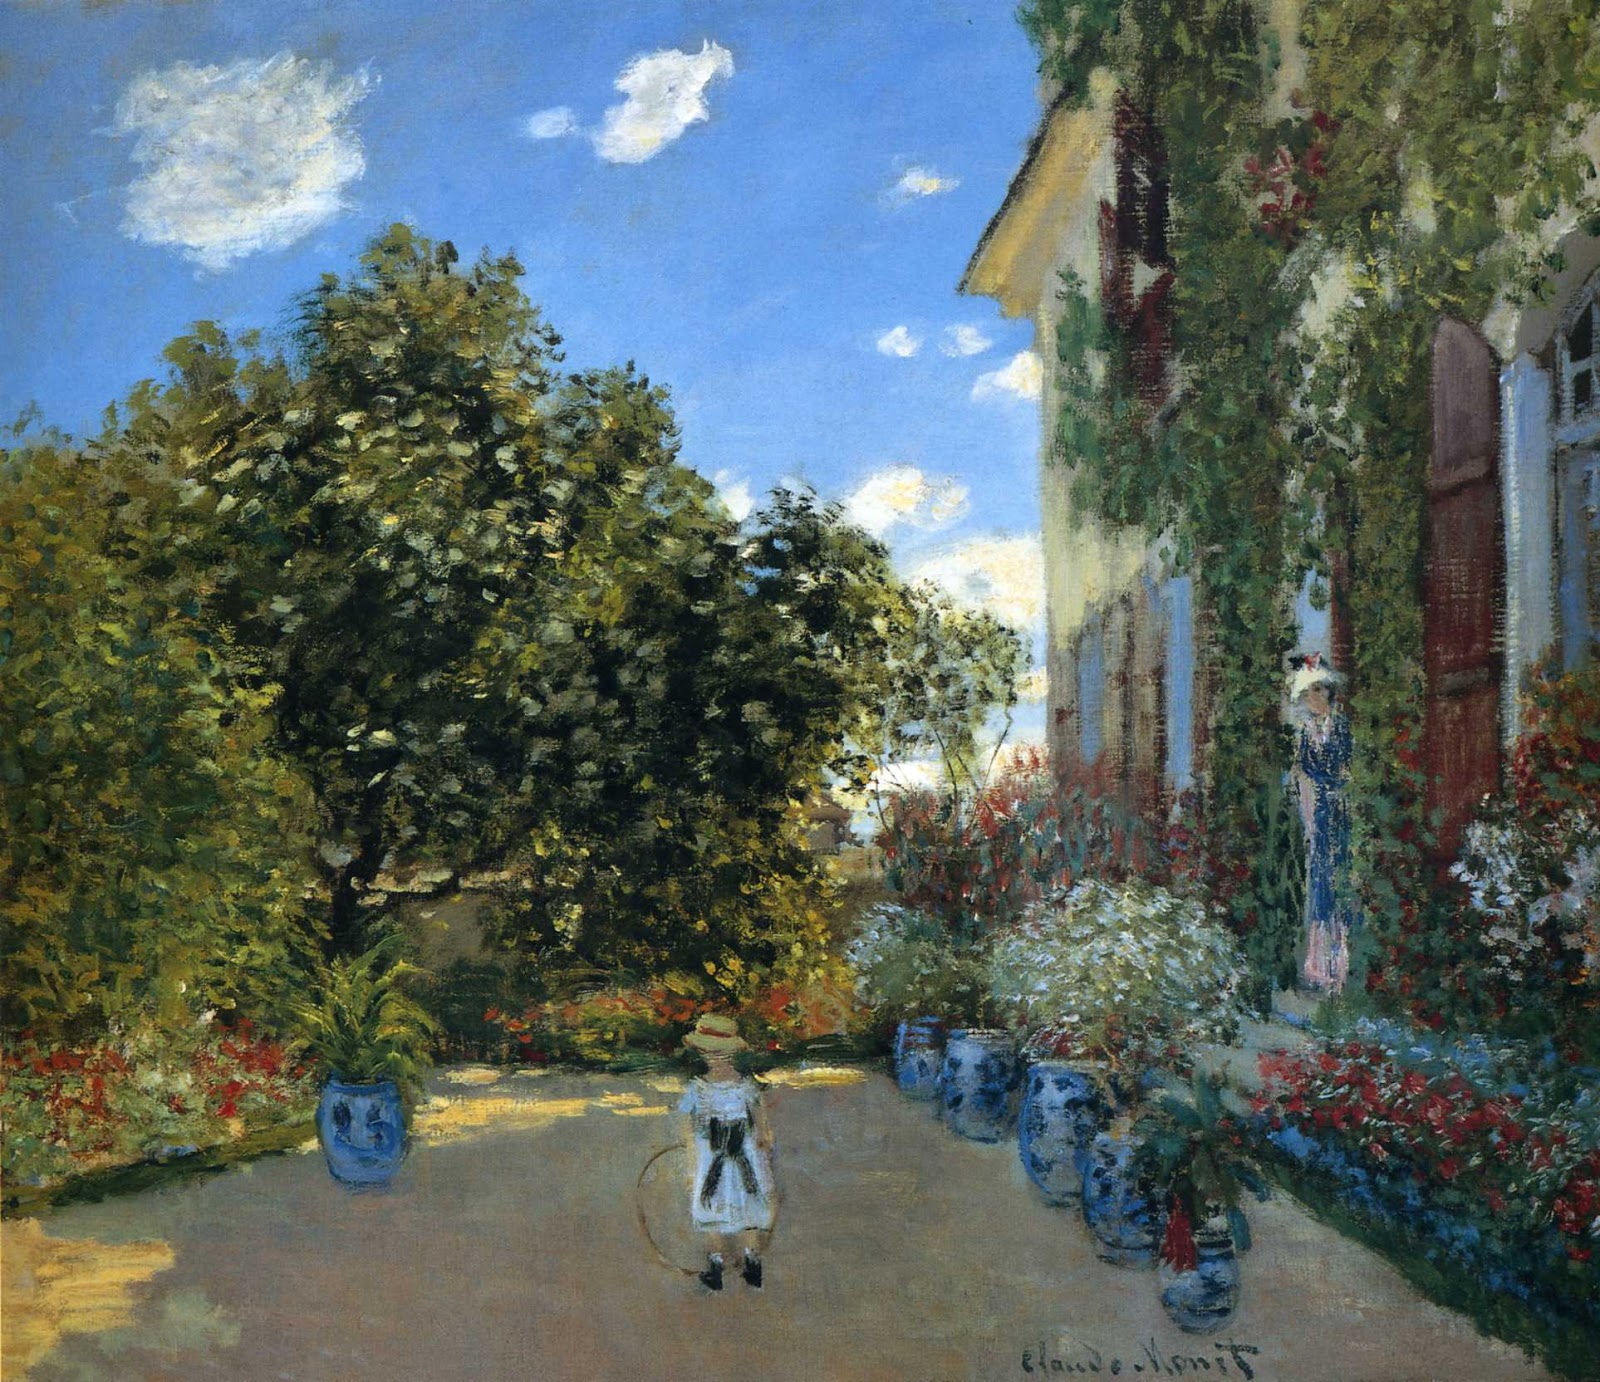 Claude+Monet-1840-1926 (725).jpg